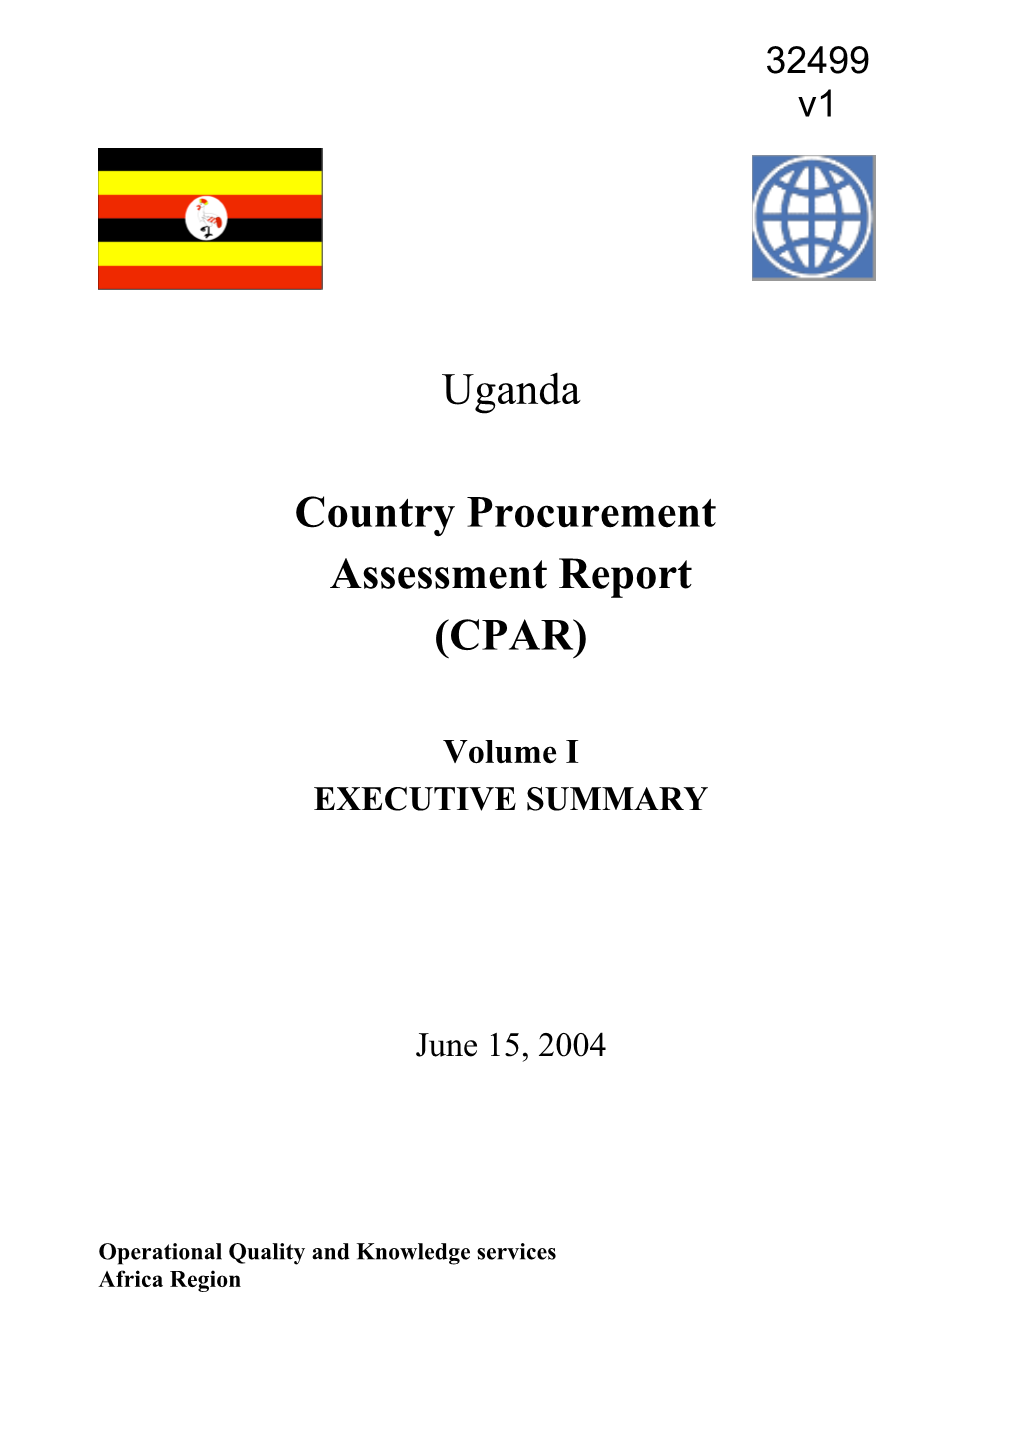 Uganda 2004 CPAR - Executive Summary June, 2004